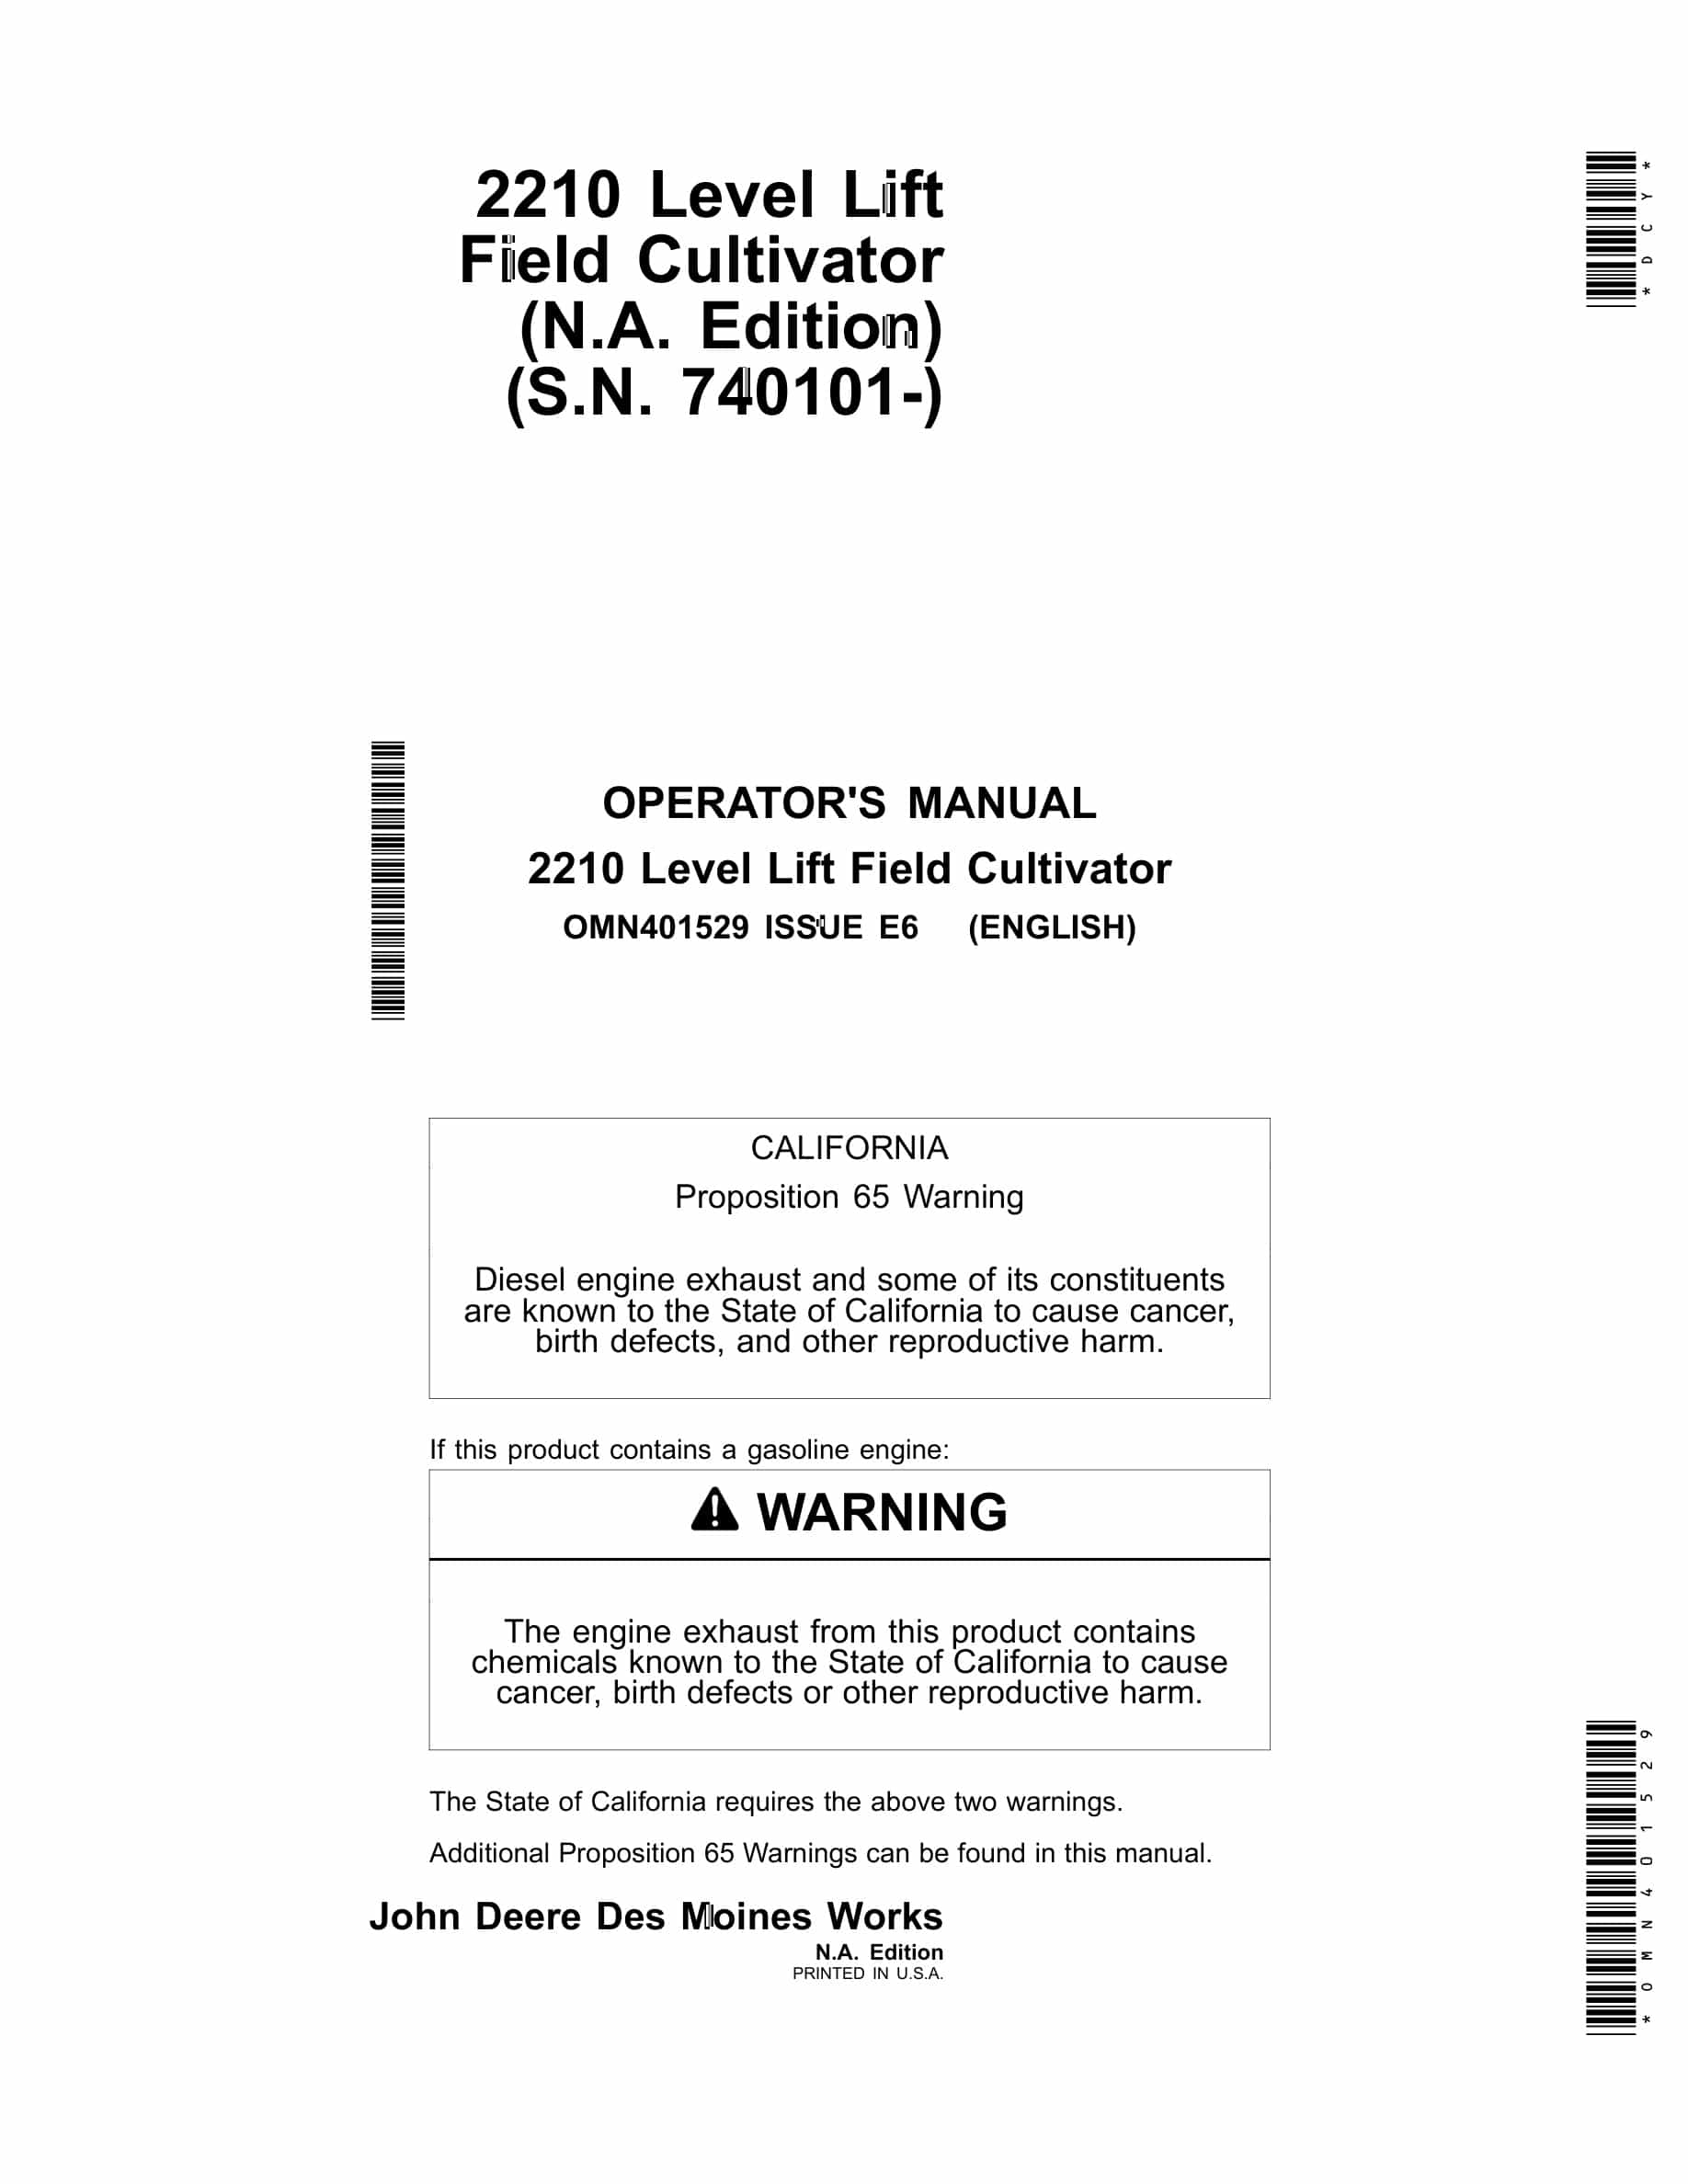 John Deere 2210 Level Lift Field Cultivator Operator Manual OMN401529-1